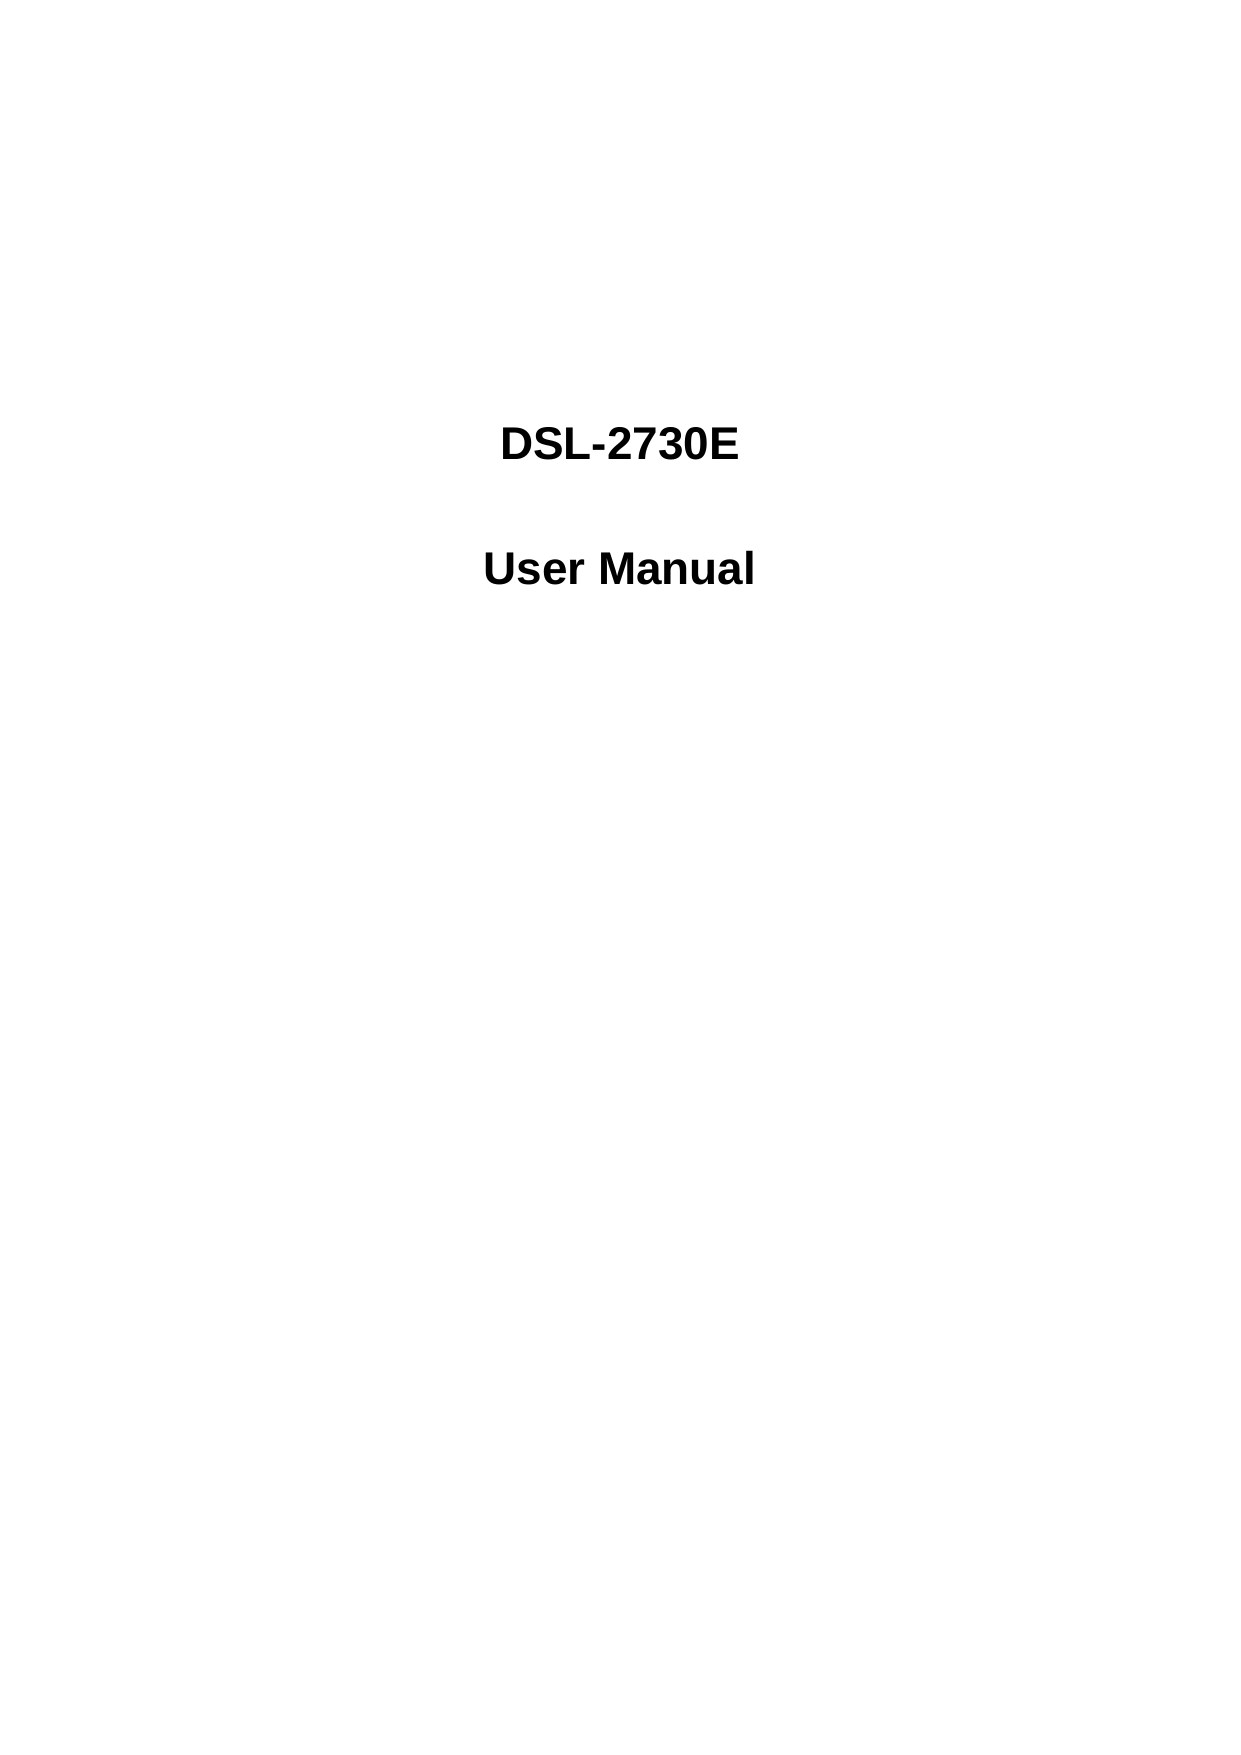      DSL-2730E User Manual  